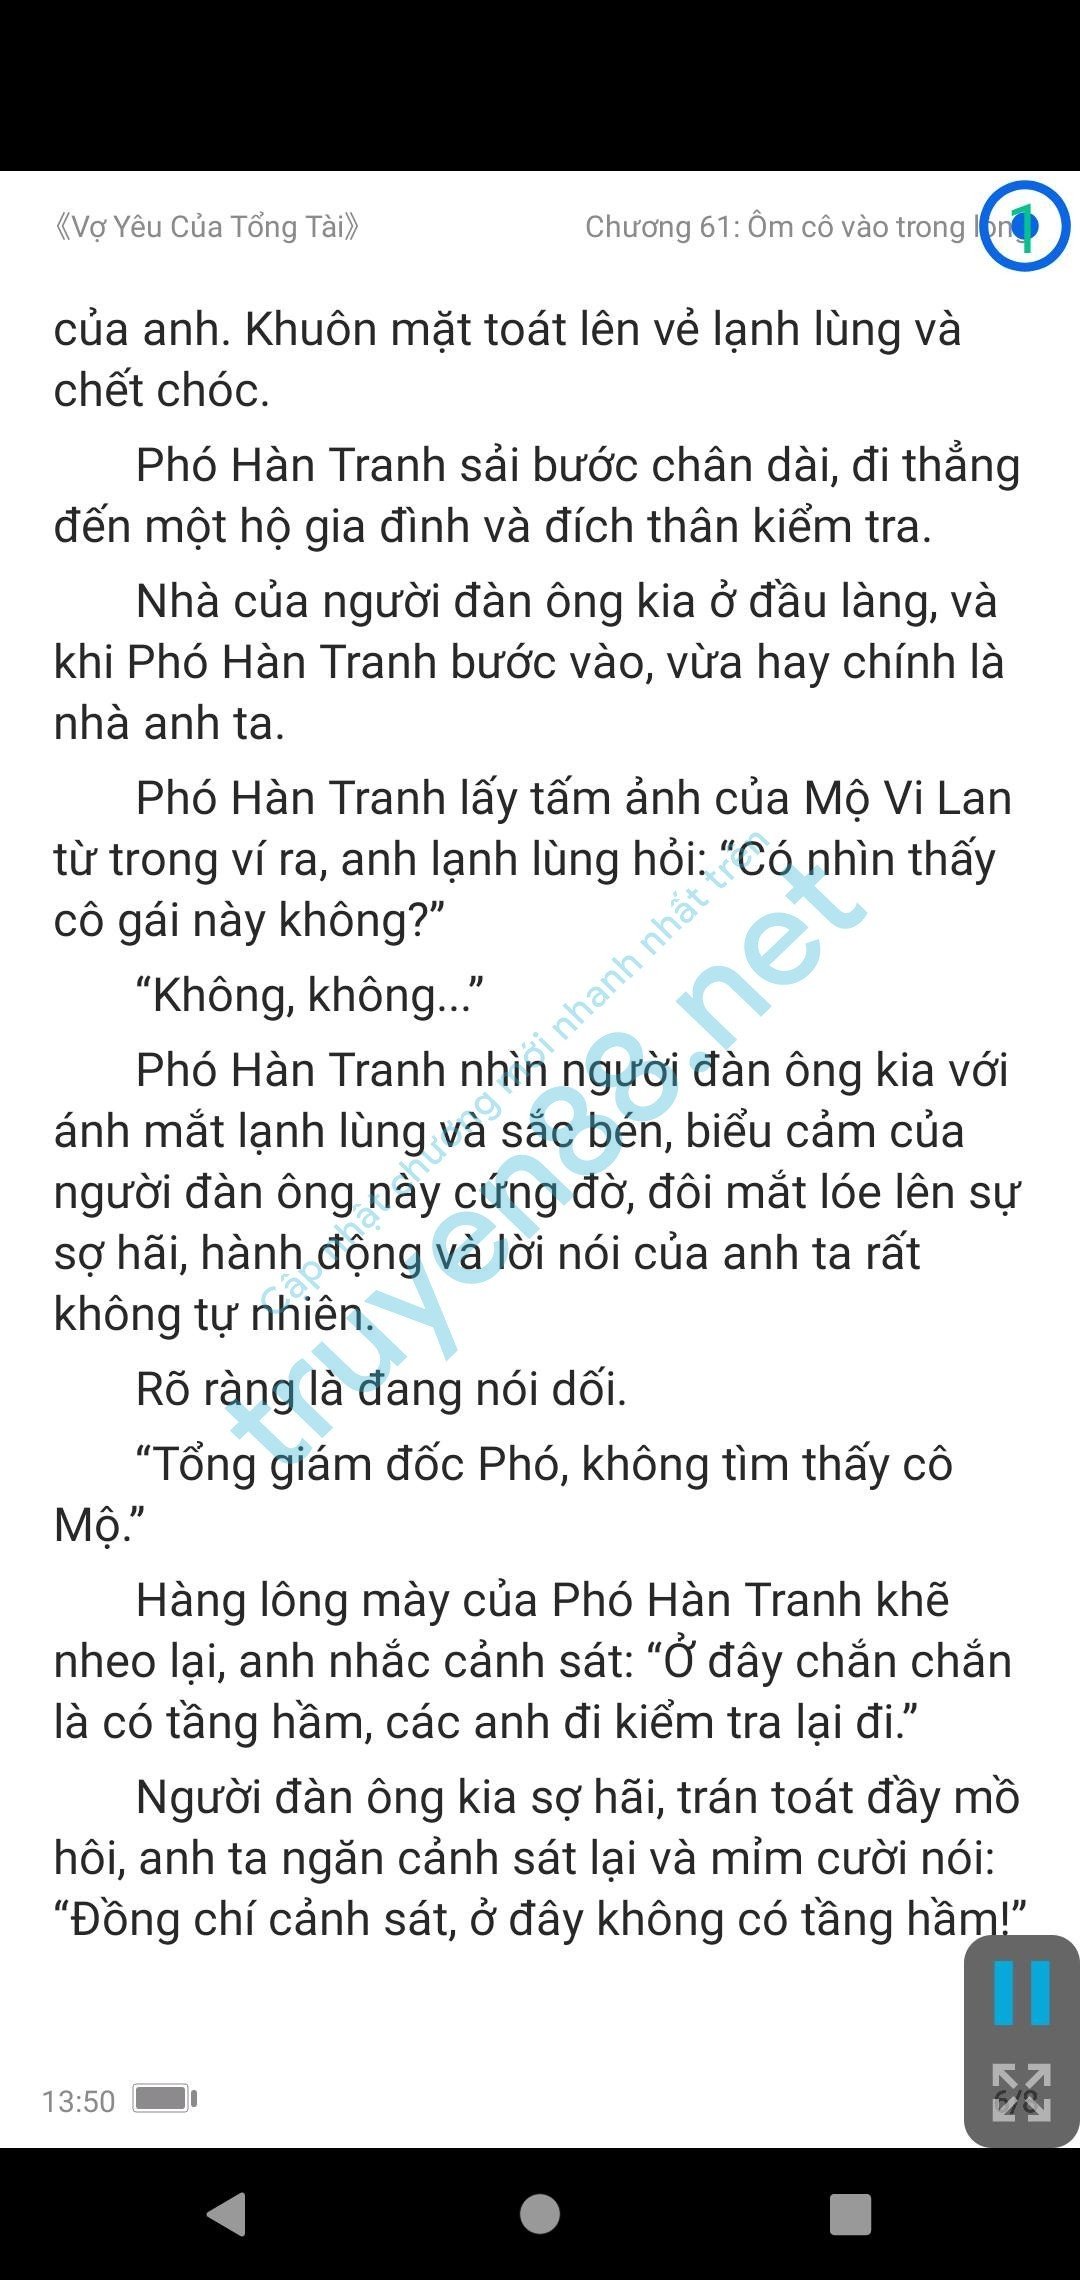 vo-yeu-cua-tong-tai-mo-vi-lan--pho-han-tranh-61-0